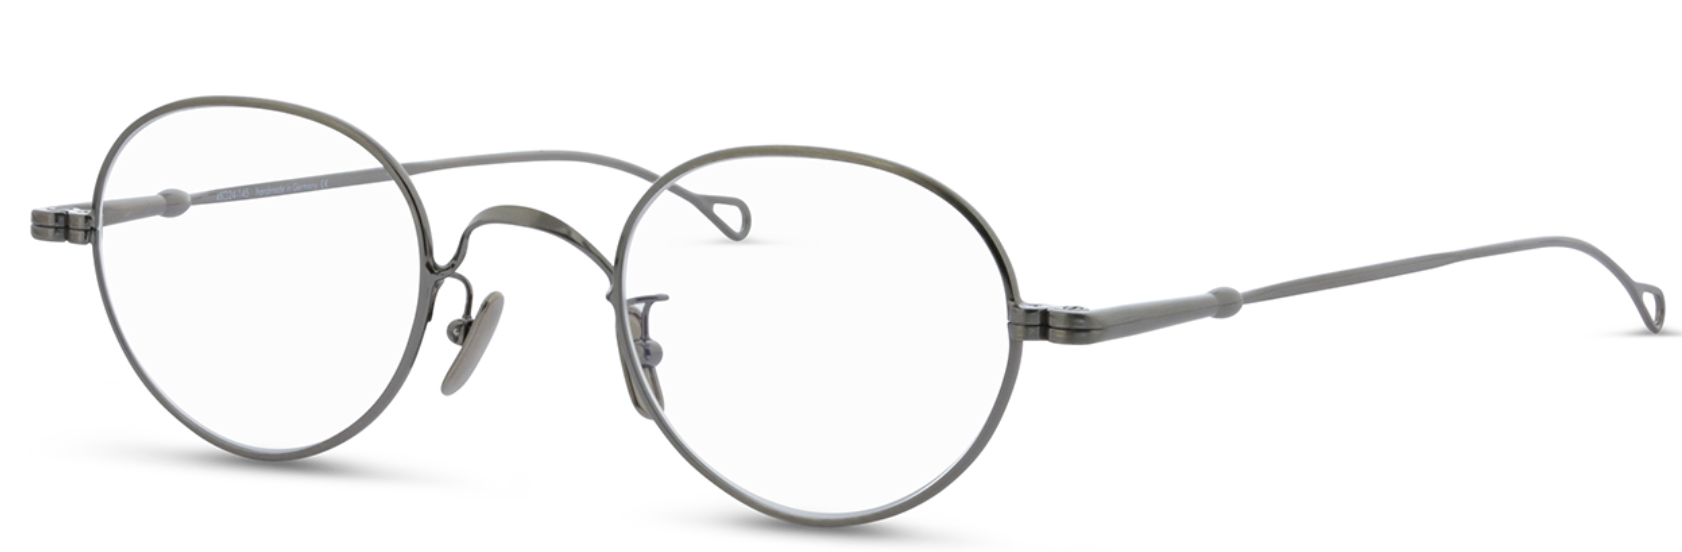 Alexander Daas - Lunor M5 02 Eyeglasses - Antique Silver - Side View